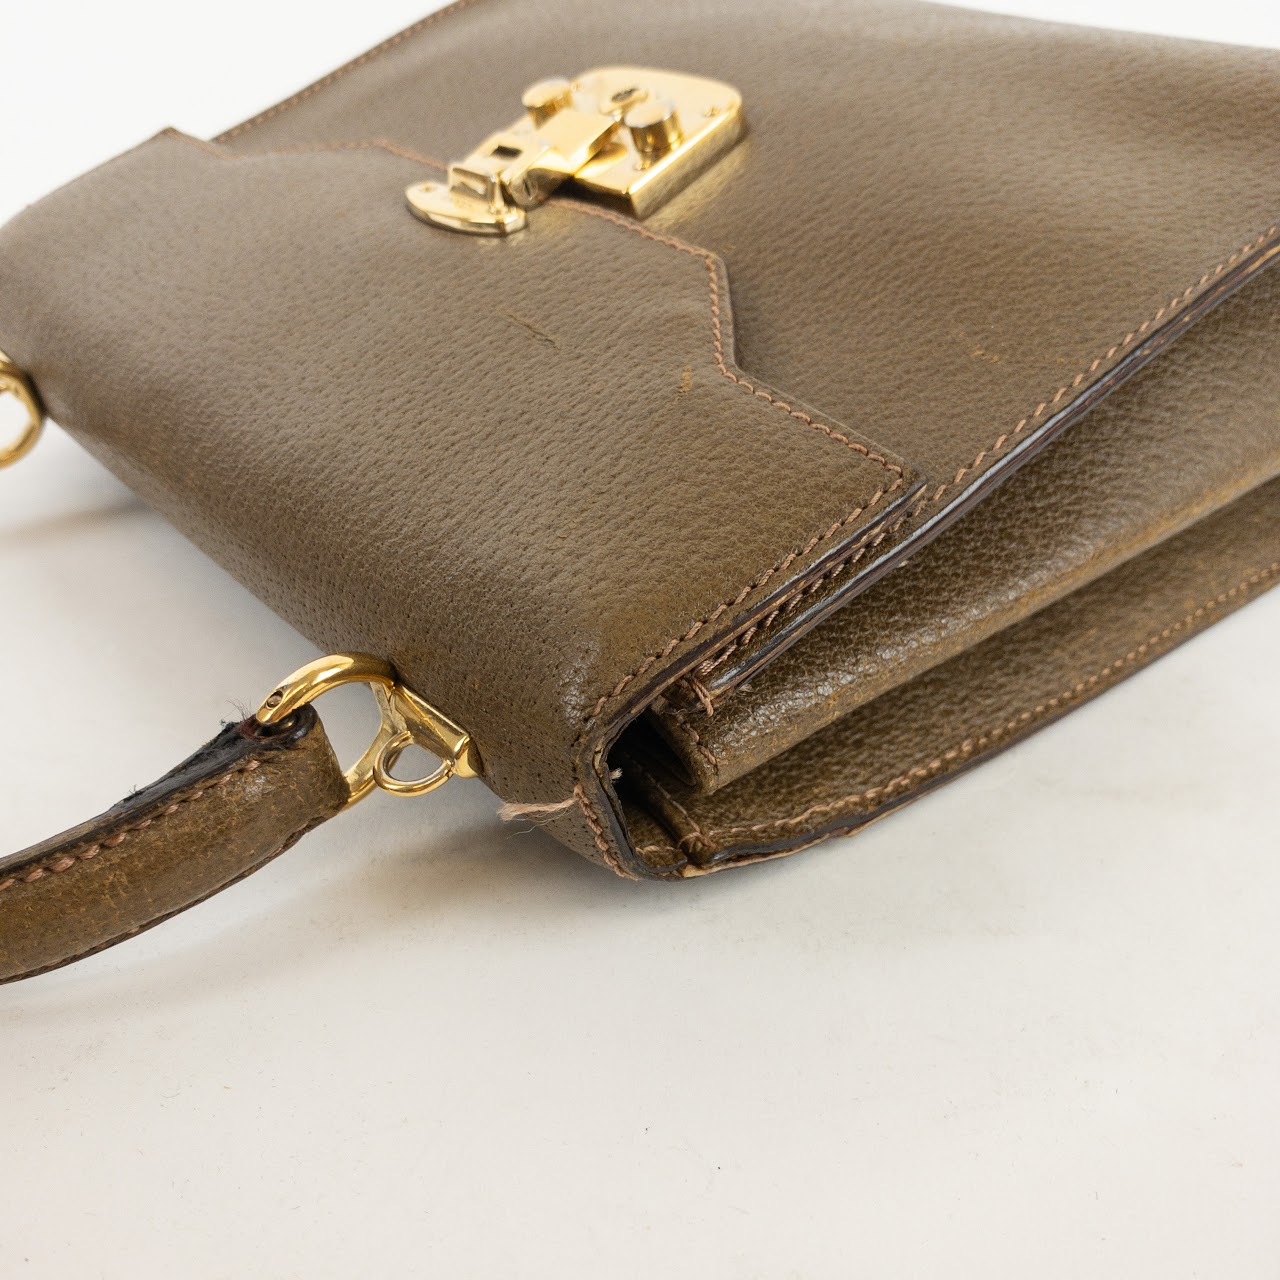 Gucci Vintage Leather Handbag